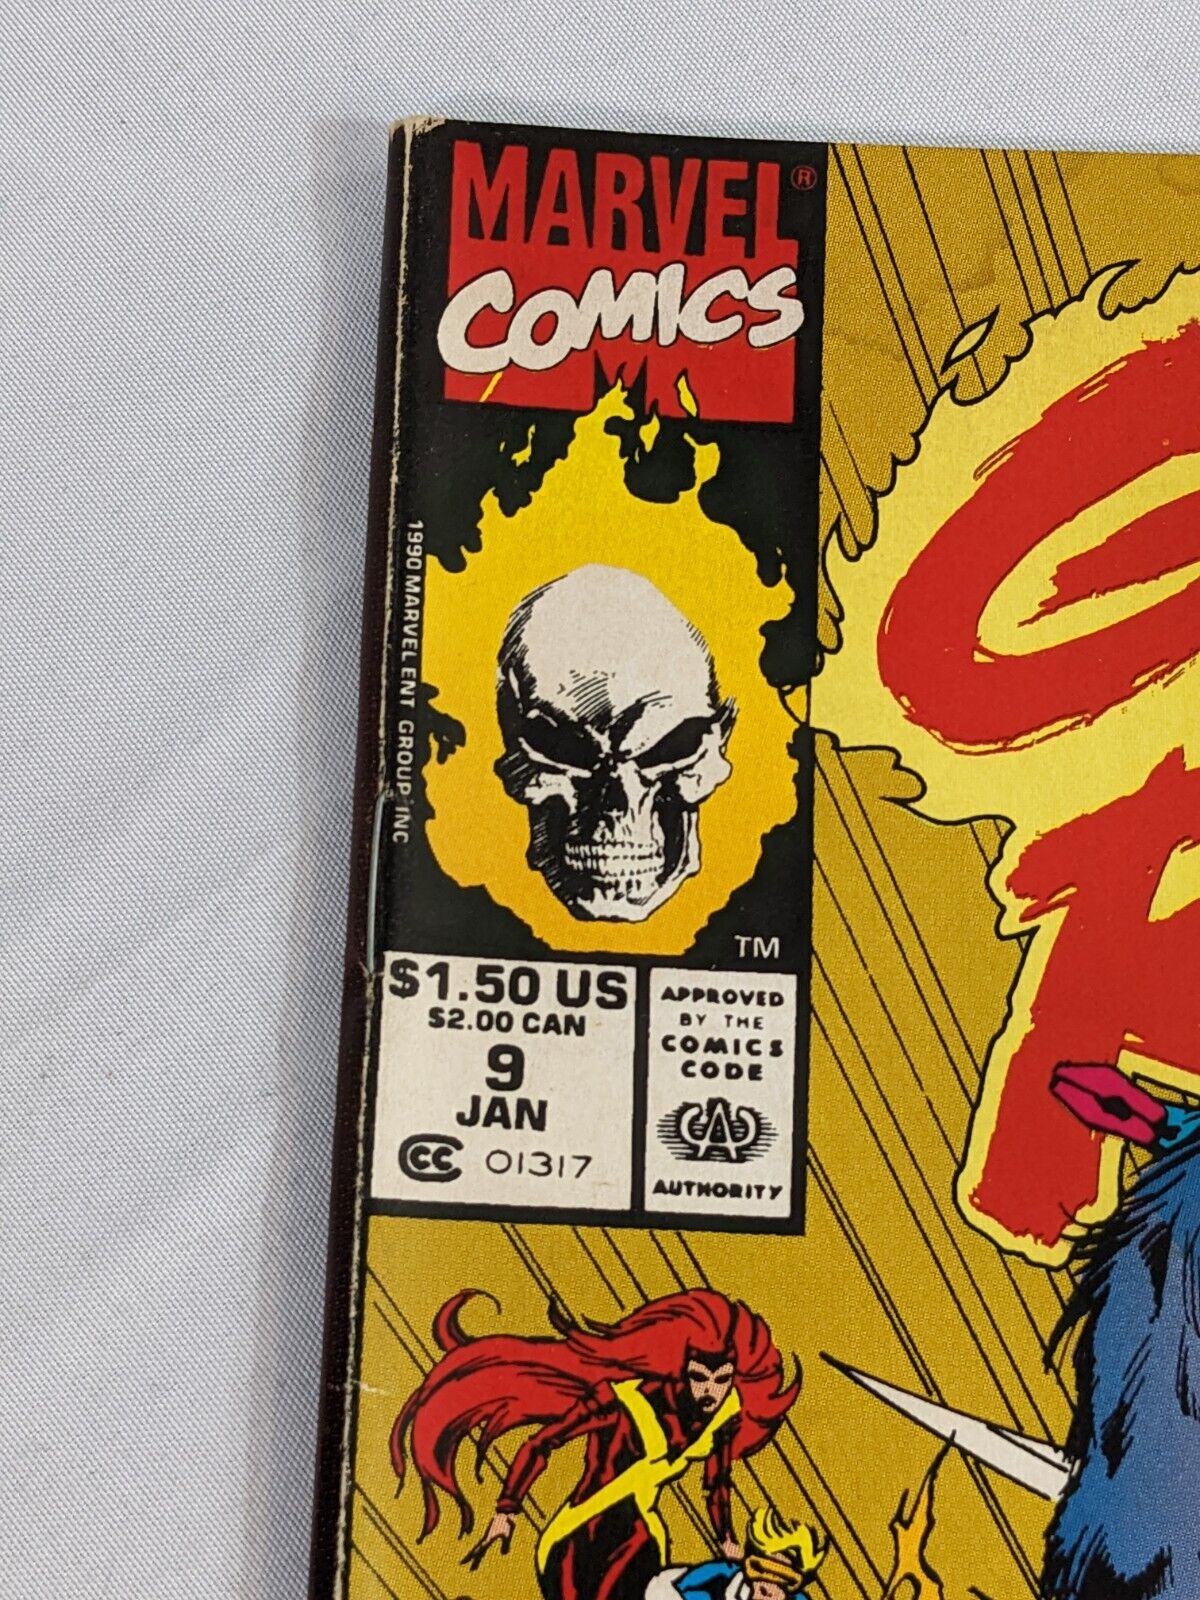 Marvel Comics Ghost Rider featuring X-Factor & the Morlocks #9 January 1991